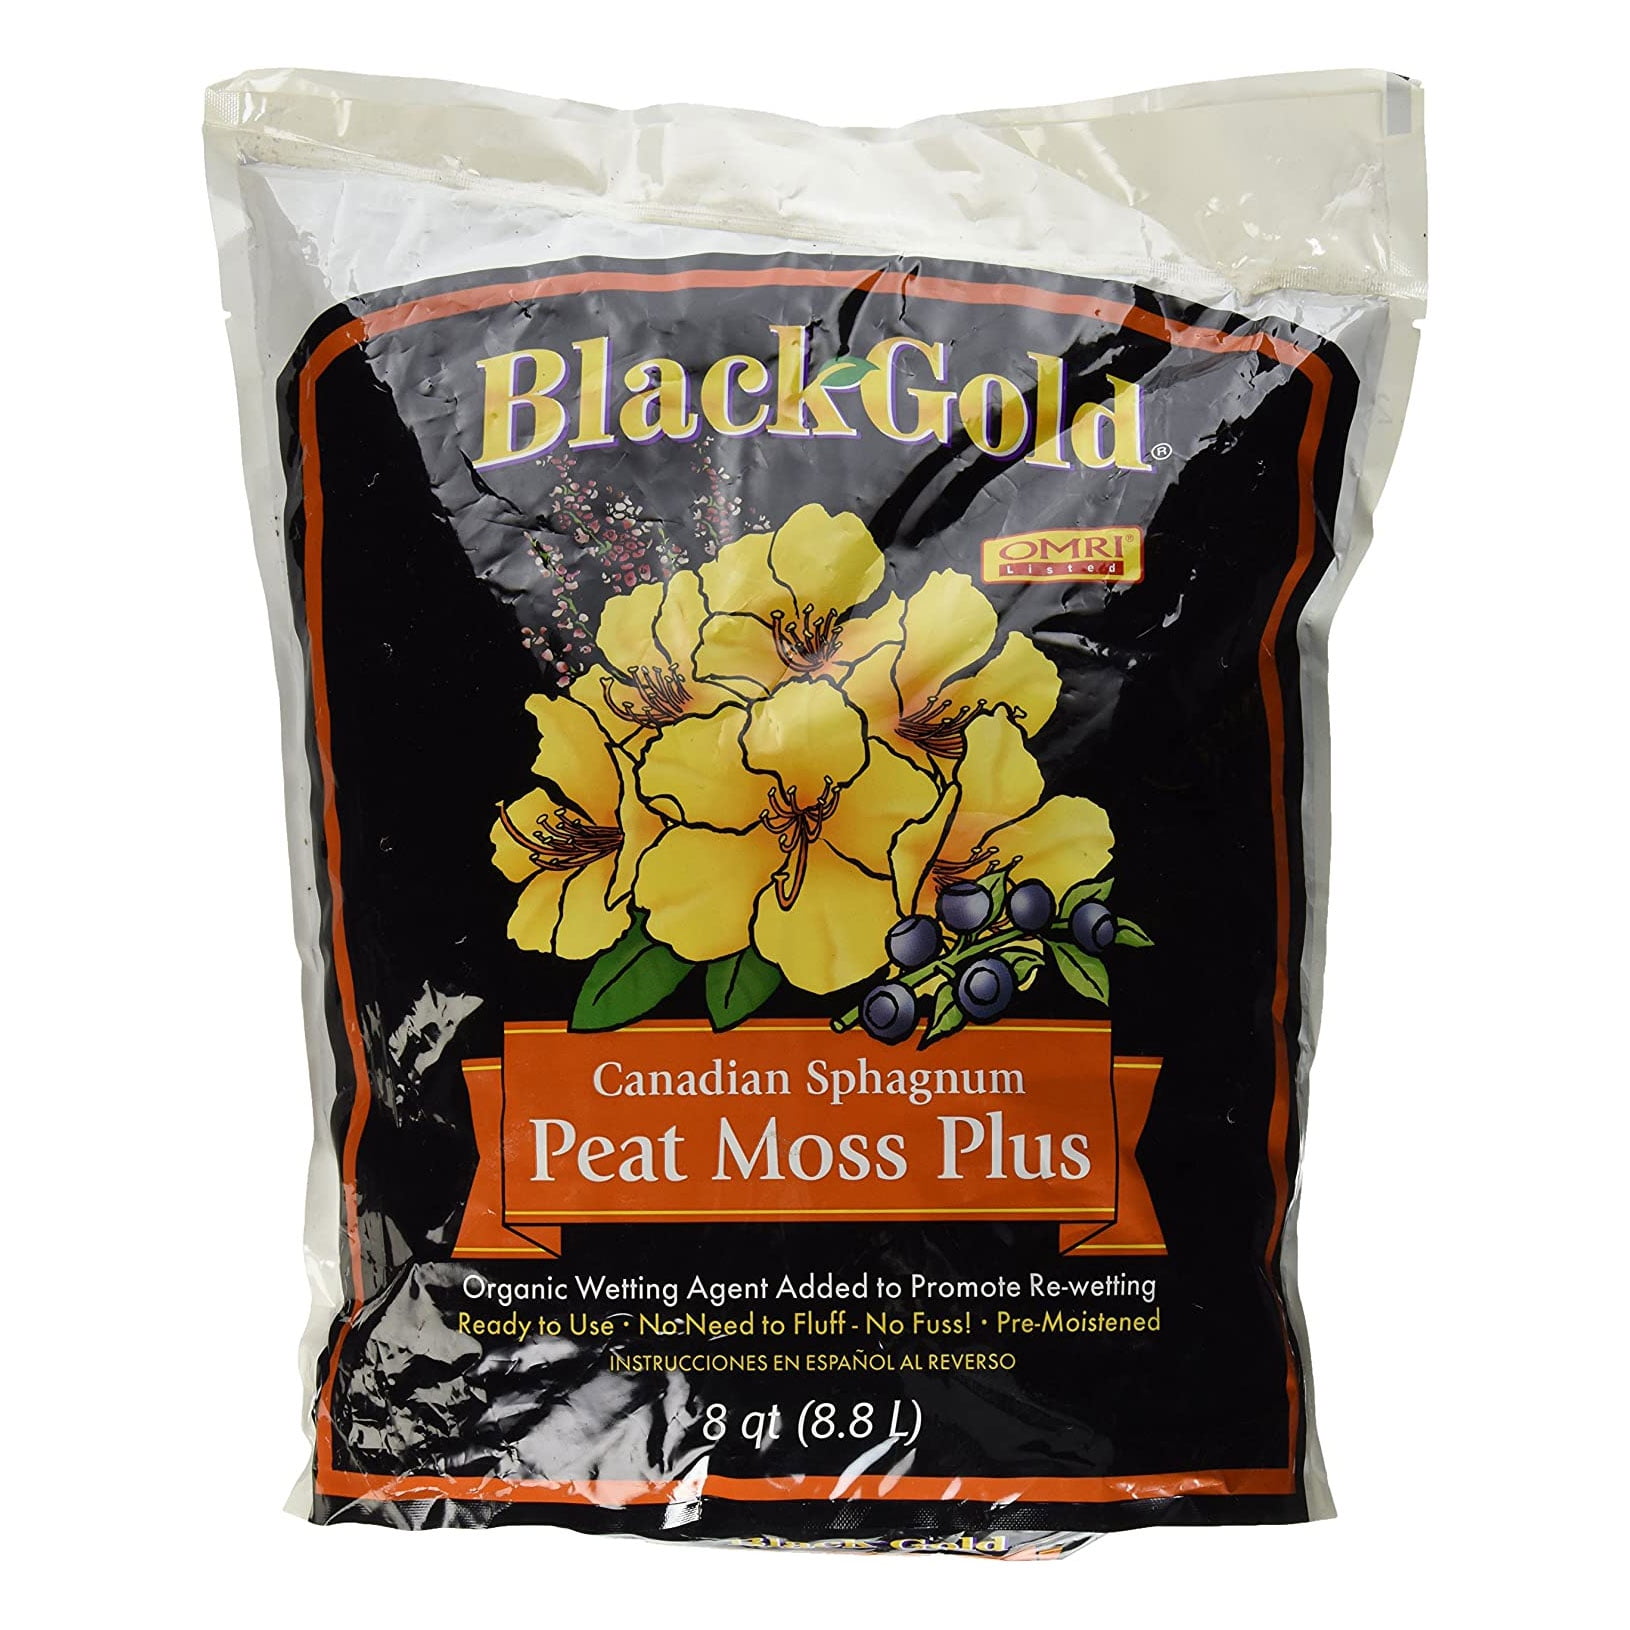 Black Gold - Peat Moss - 3.8 cu ft – Steve Regan Company